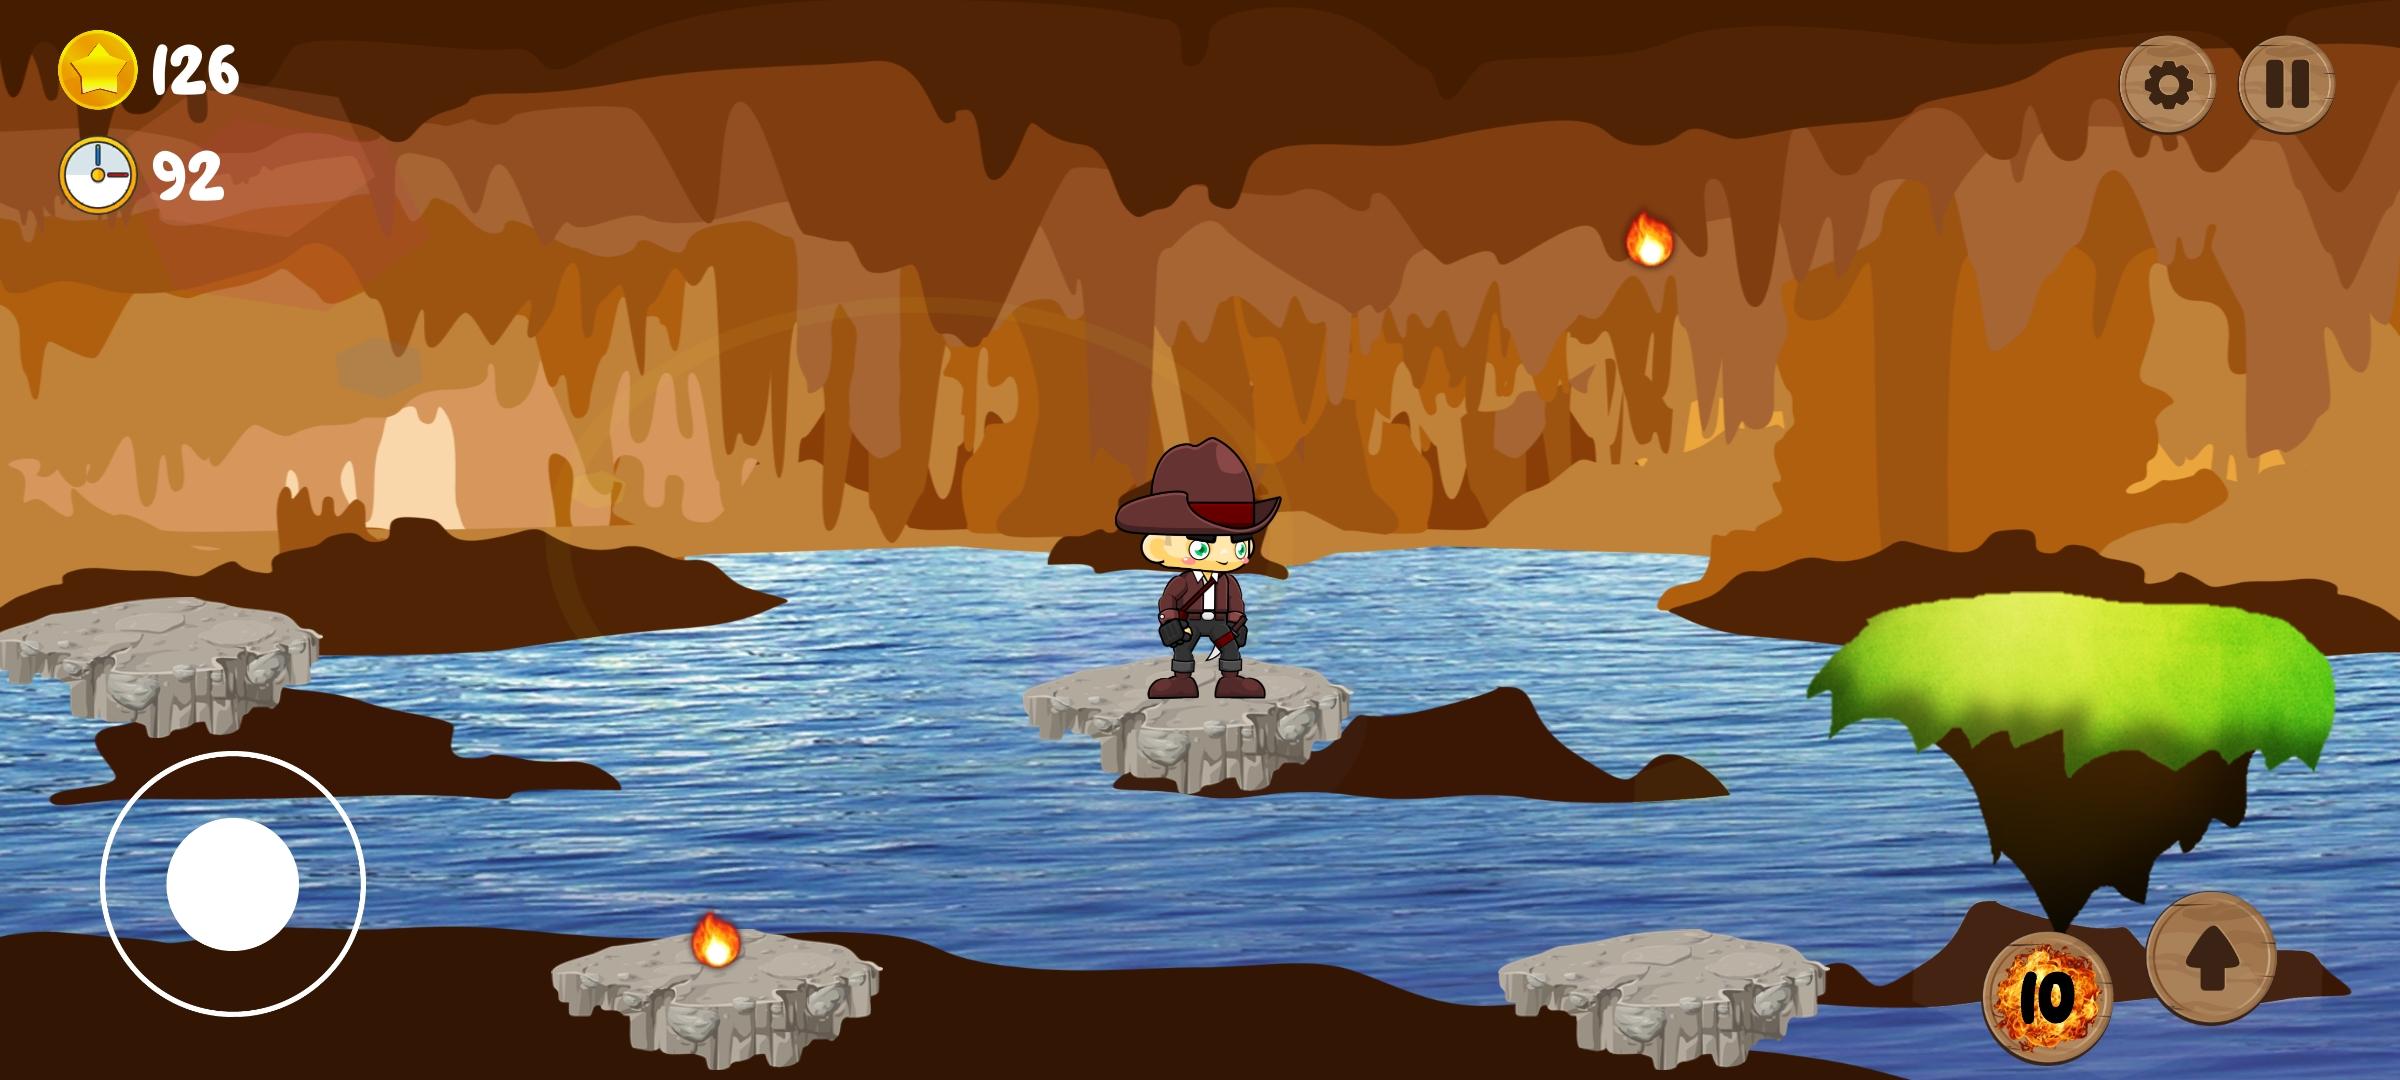 RFG - Adventure Boy 1.6 Screenshot 6